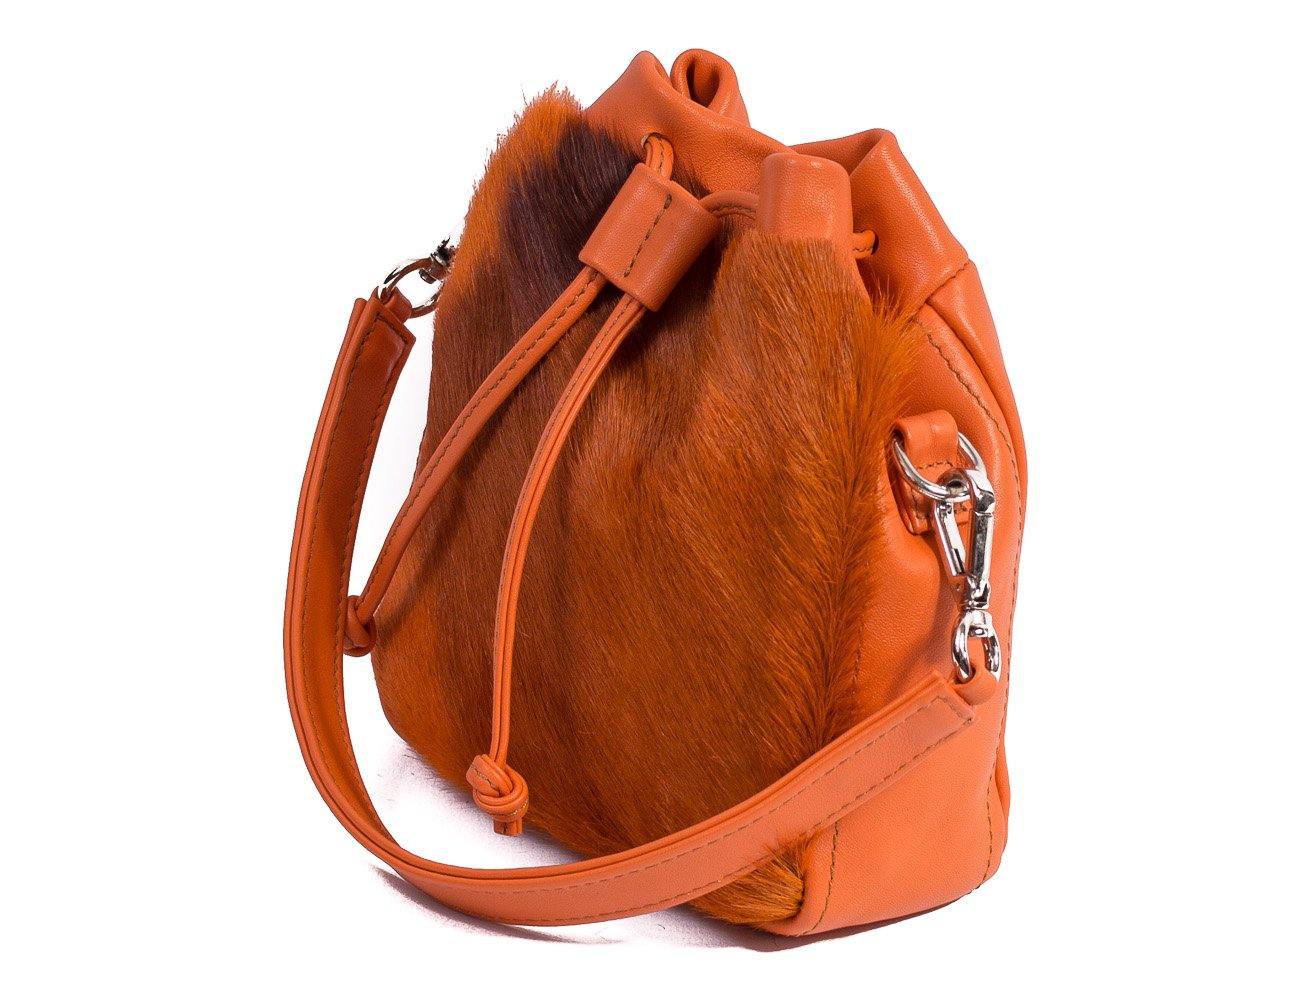 sherene melinda springbok hair-on-hide orange leather pouch bag Stripe side angle